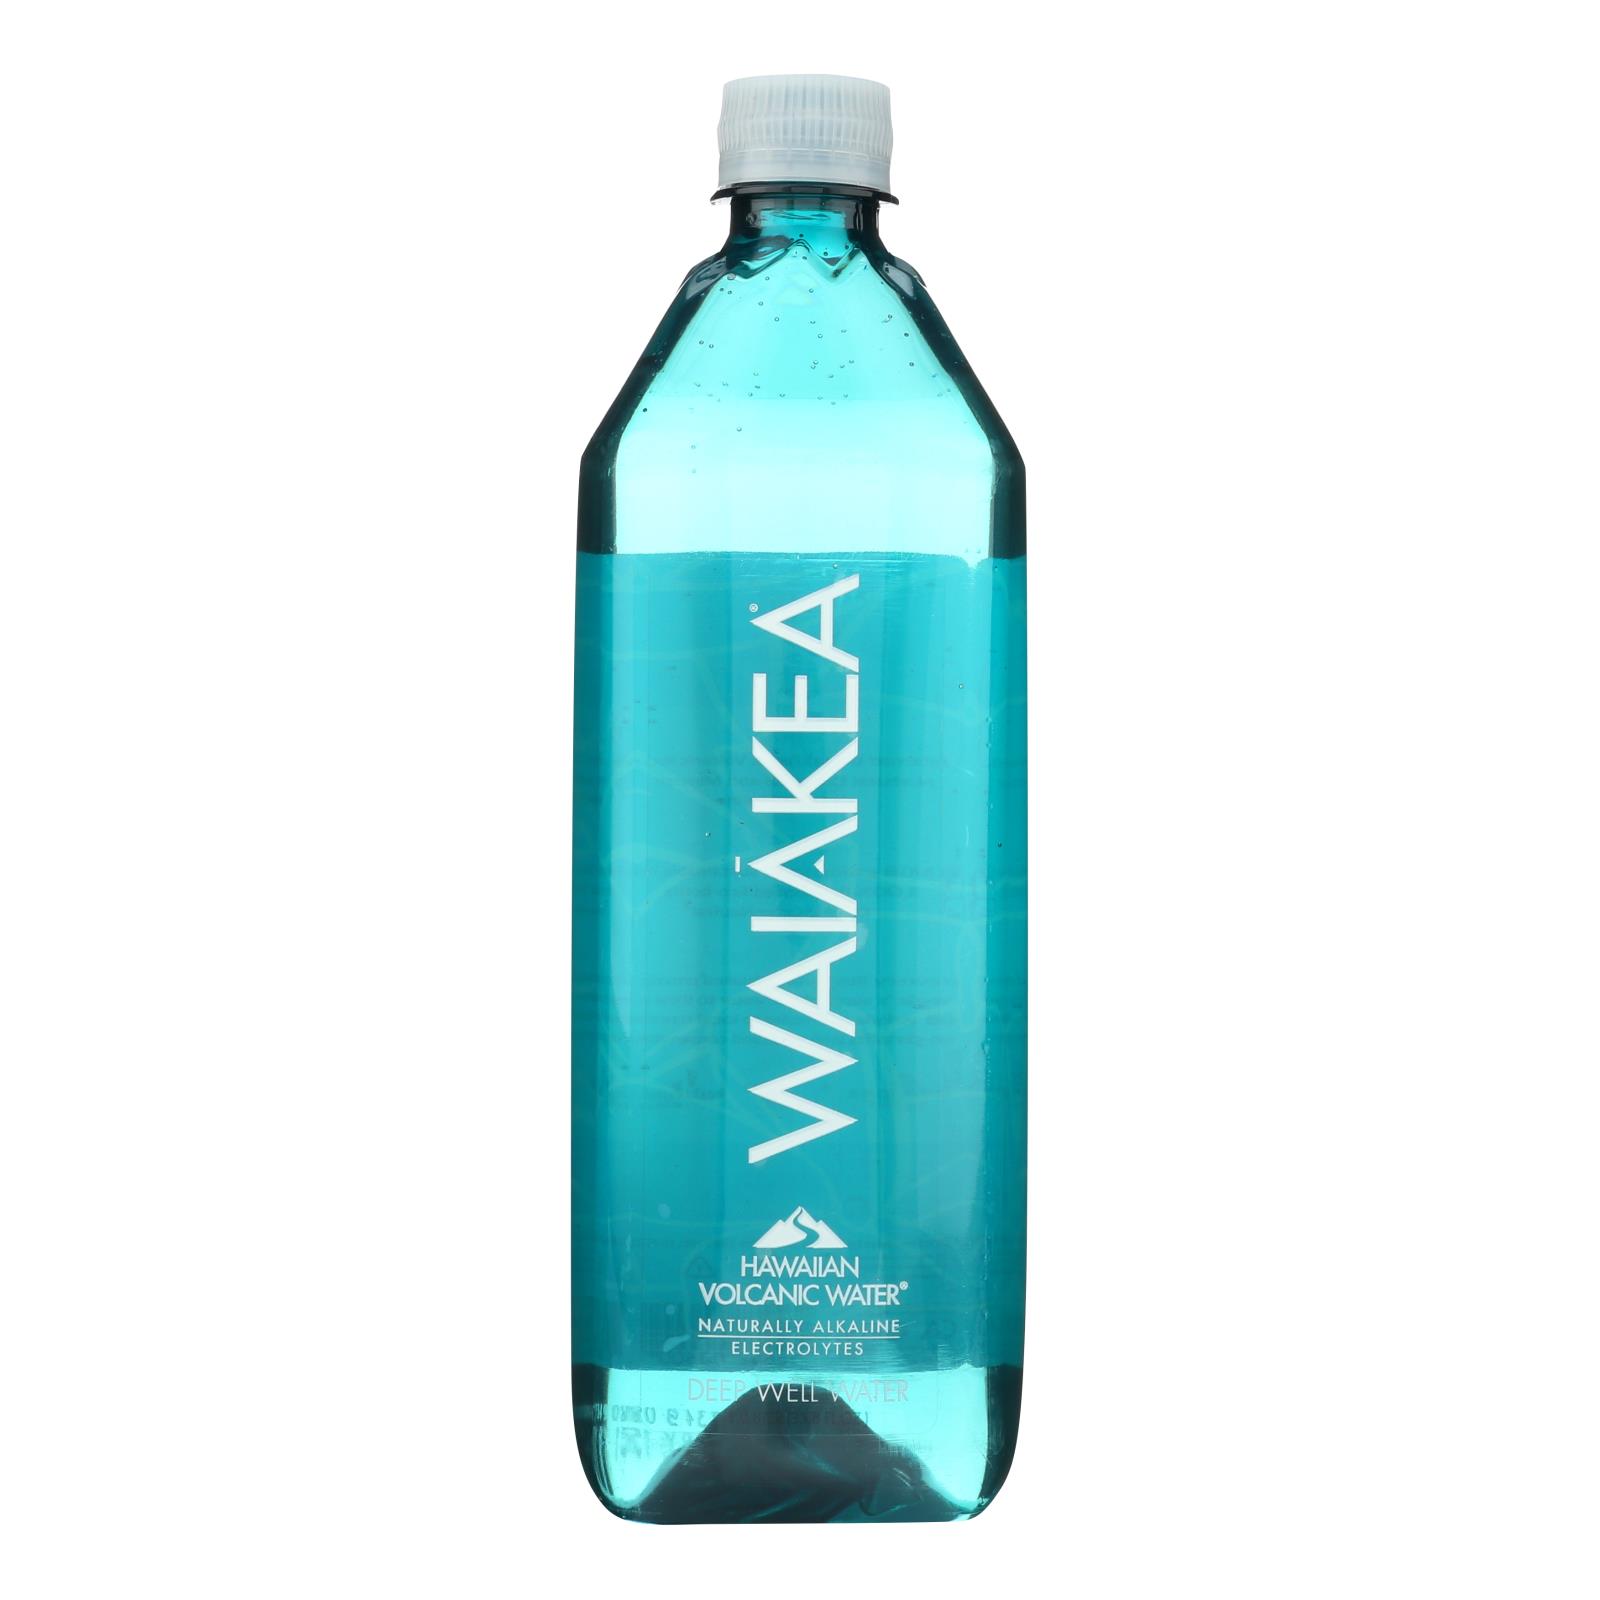 Waiakea Naturally Alkaline Hawaiian Volcanic Bottled Water - 12개 묶음상품 - 33.8 FZ